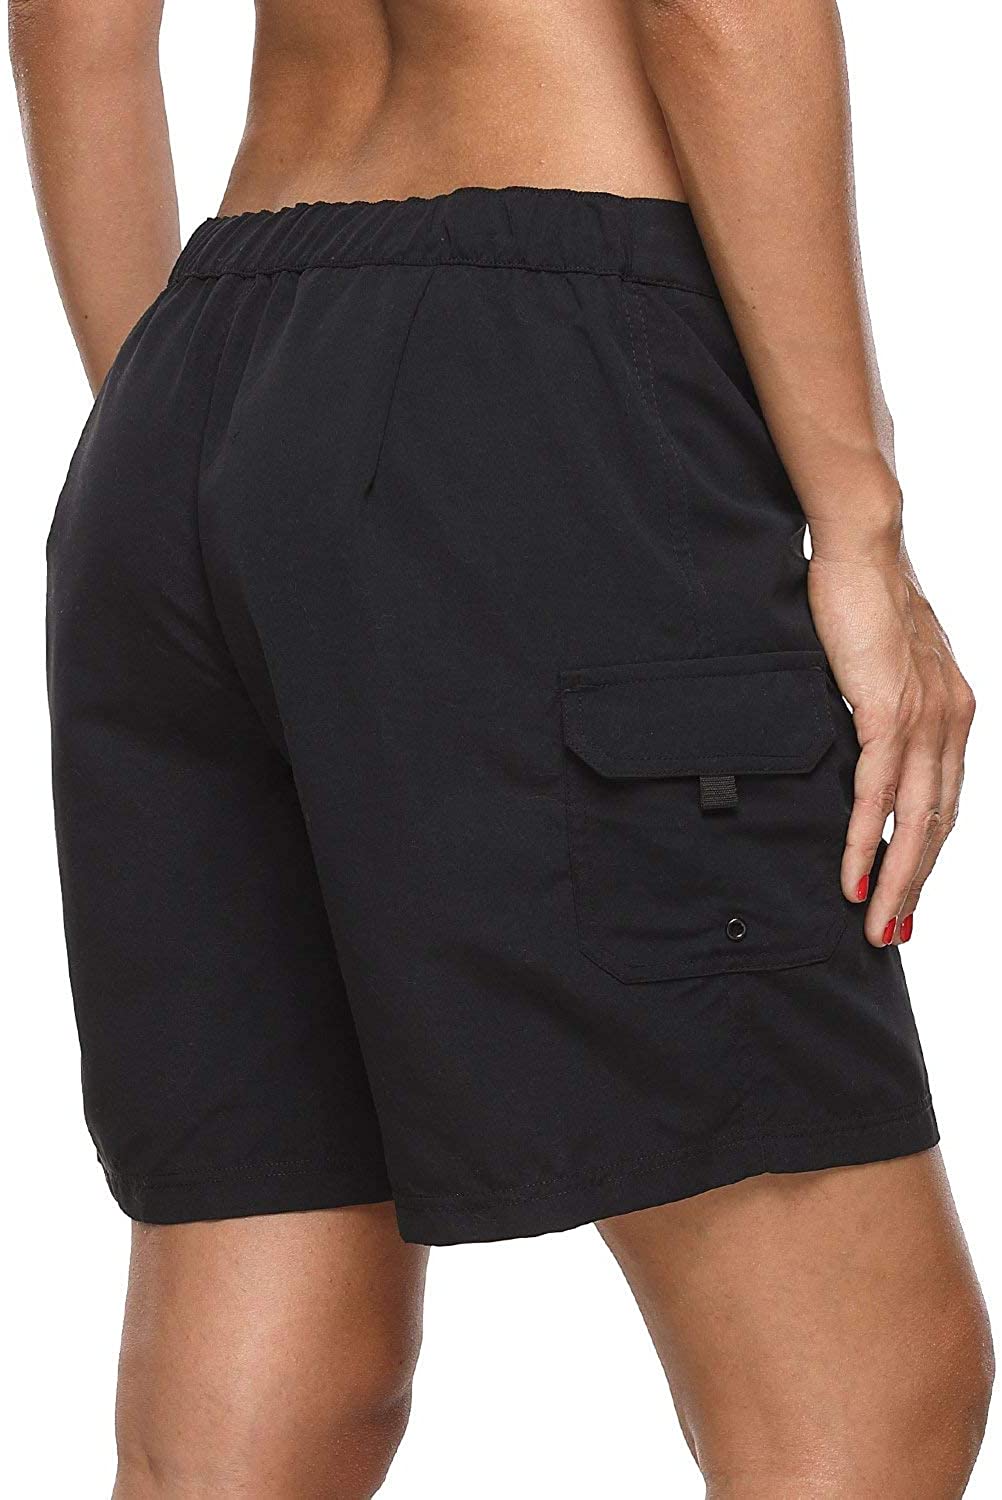 Sociala Women's Long Board Shorts with, Black(cargo Pocket), Size XX ...